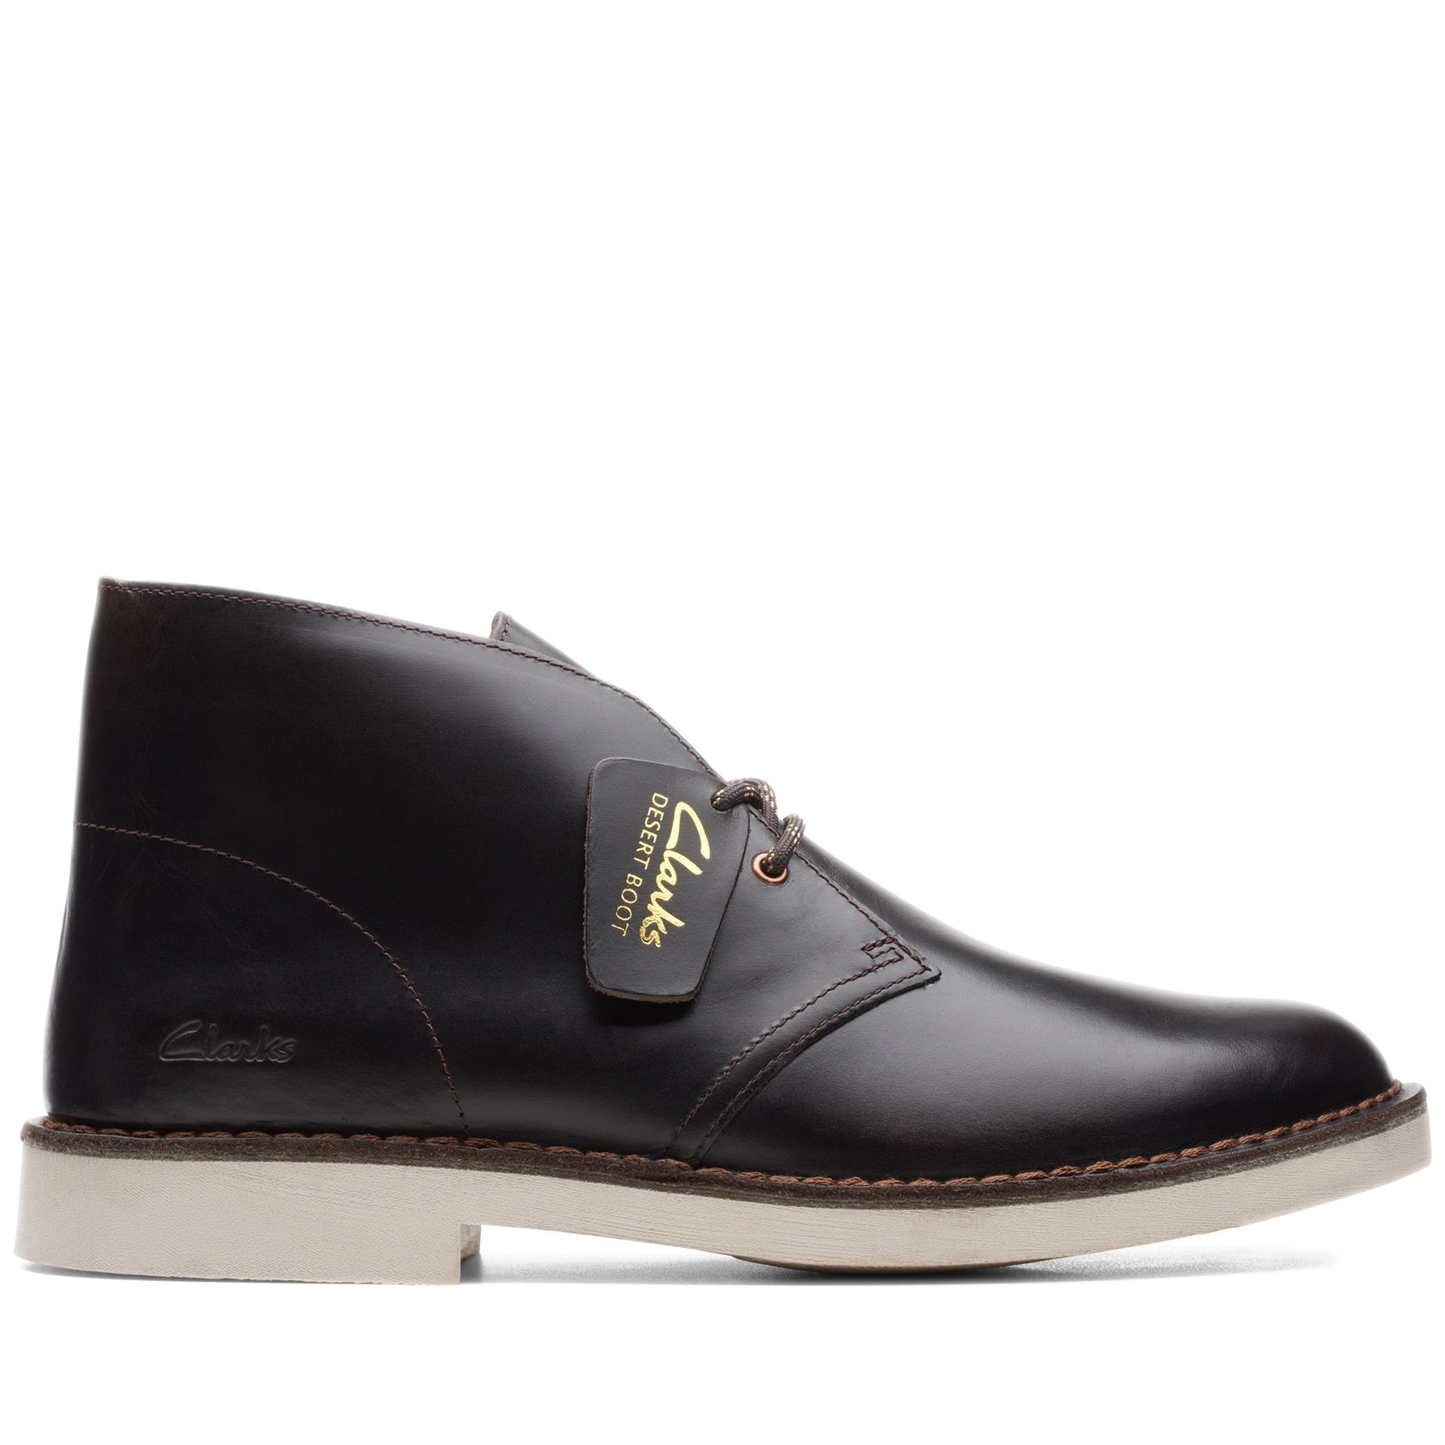 Men's Clarks Desert Boot 2 - Dark Brown Leather